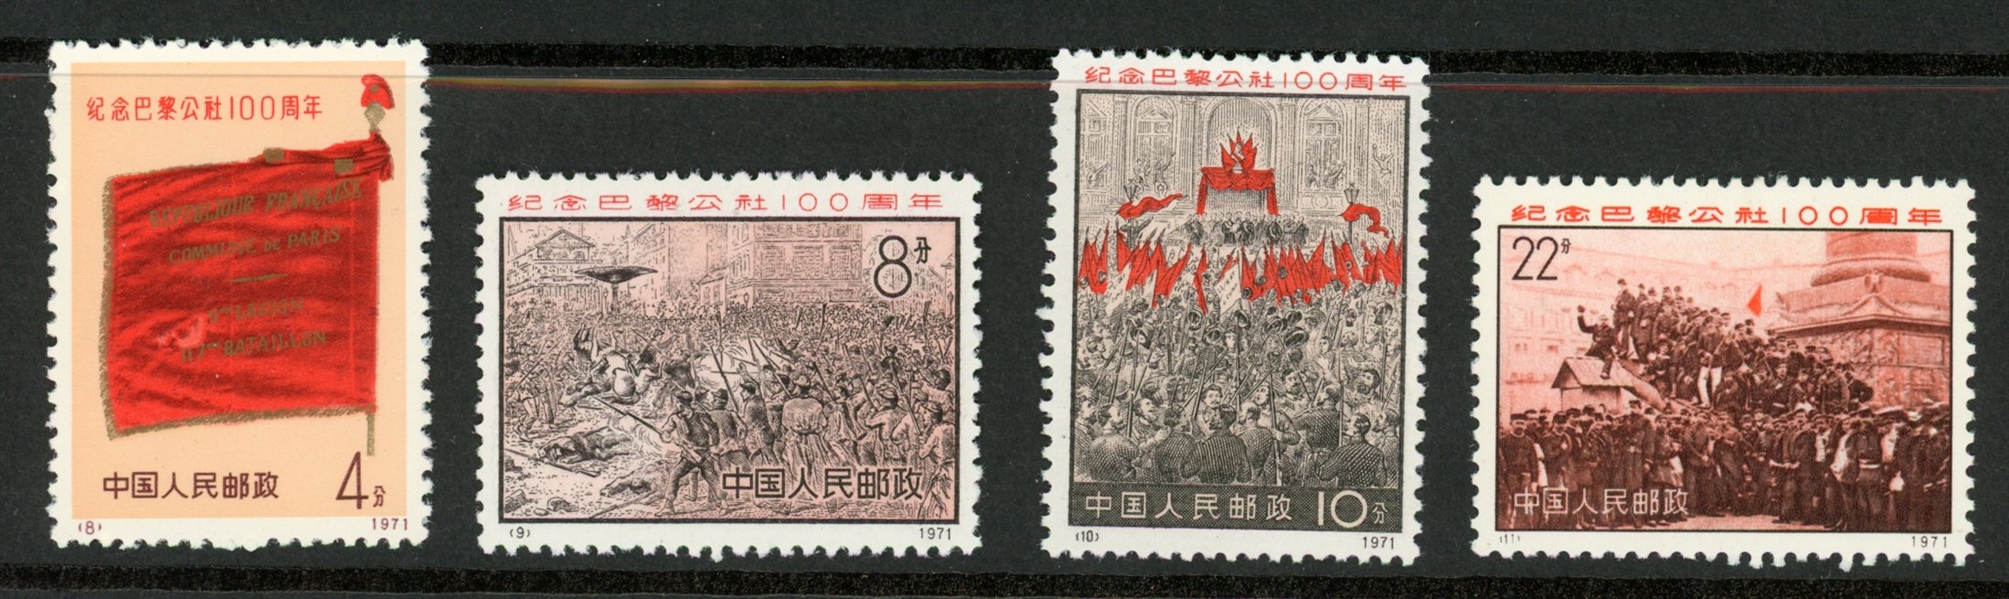 People's Republic of China Scott 1054-1057 MH Complete Set - Paris Commune 1971 (SCV $256.75)